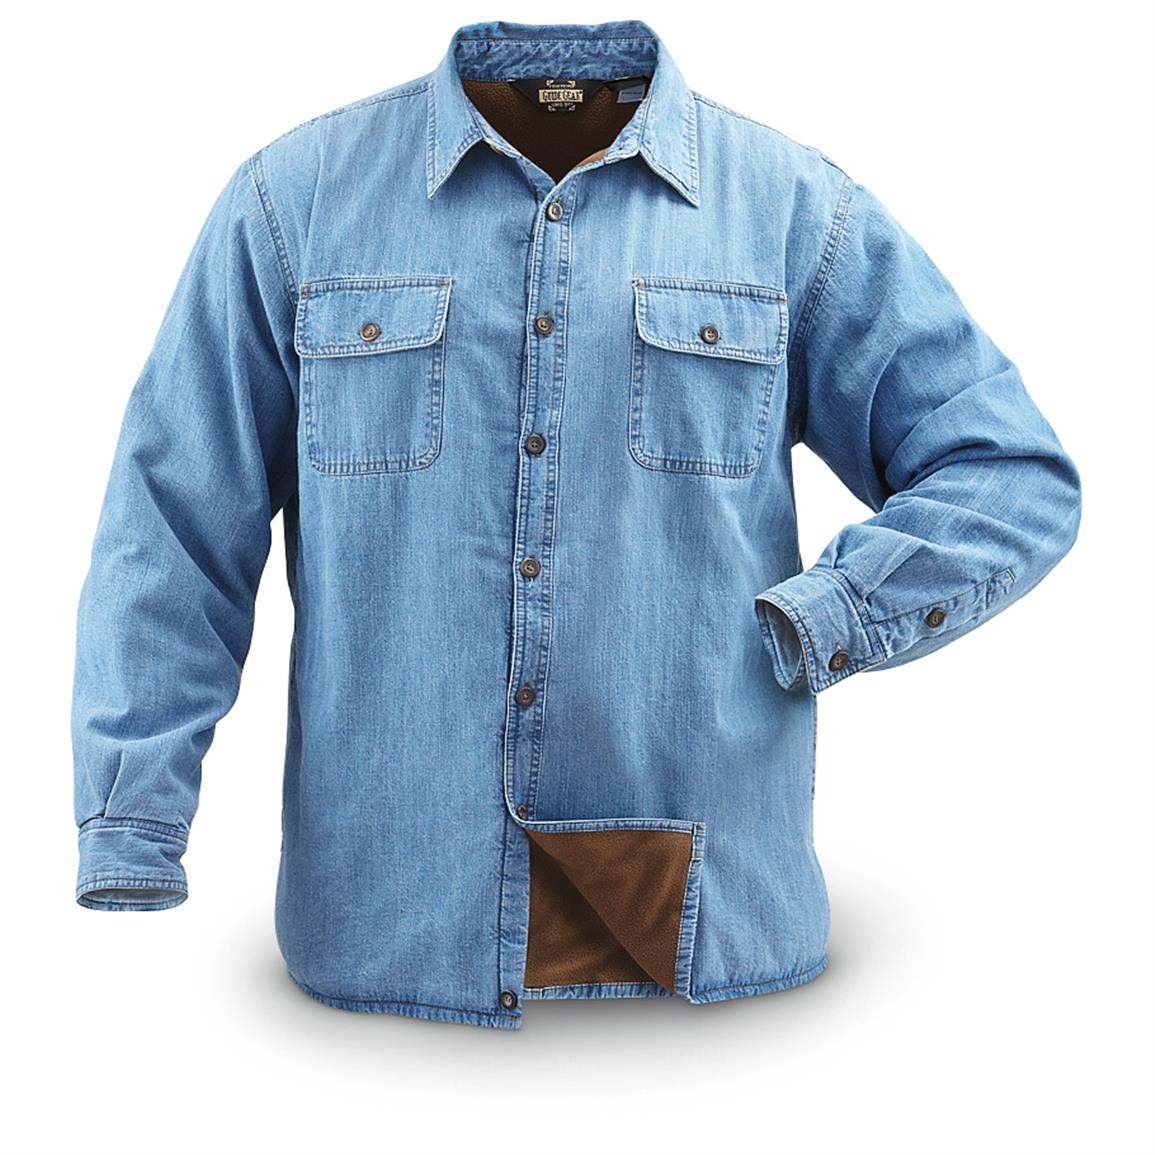 Guide Gear Fleece-lined Long-sleeved Shirt - 593675, Shirts at ...